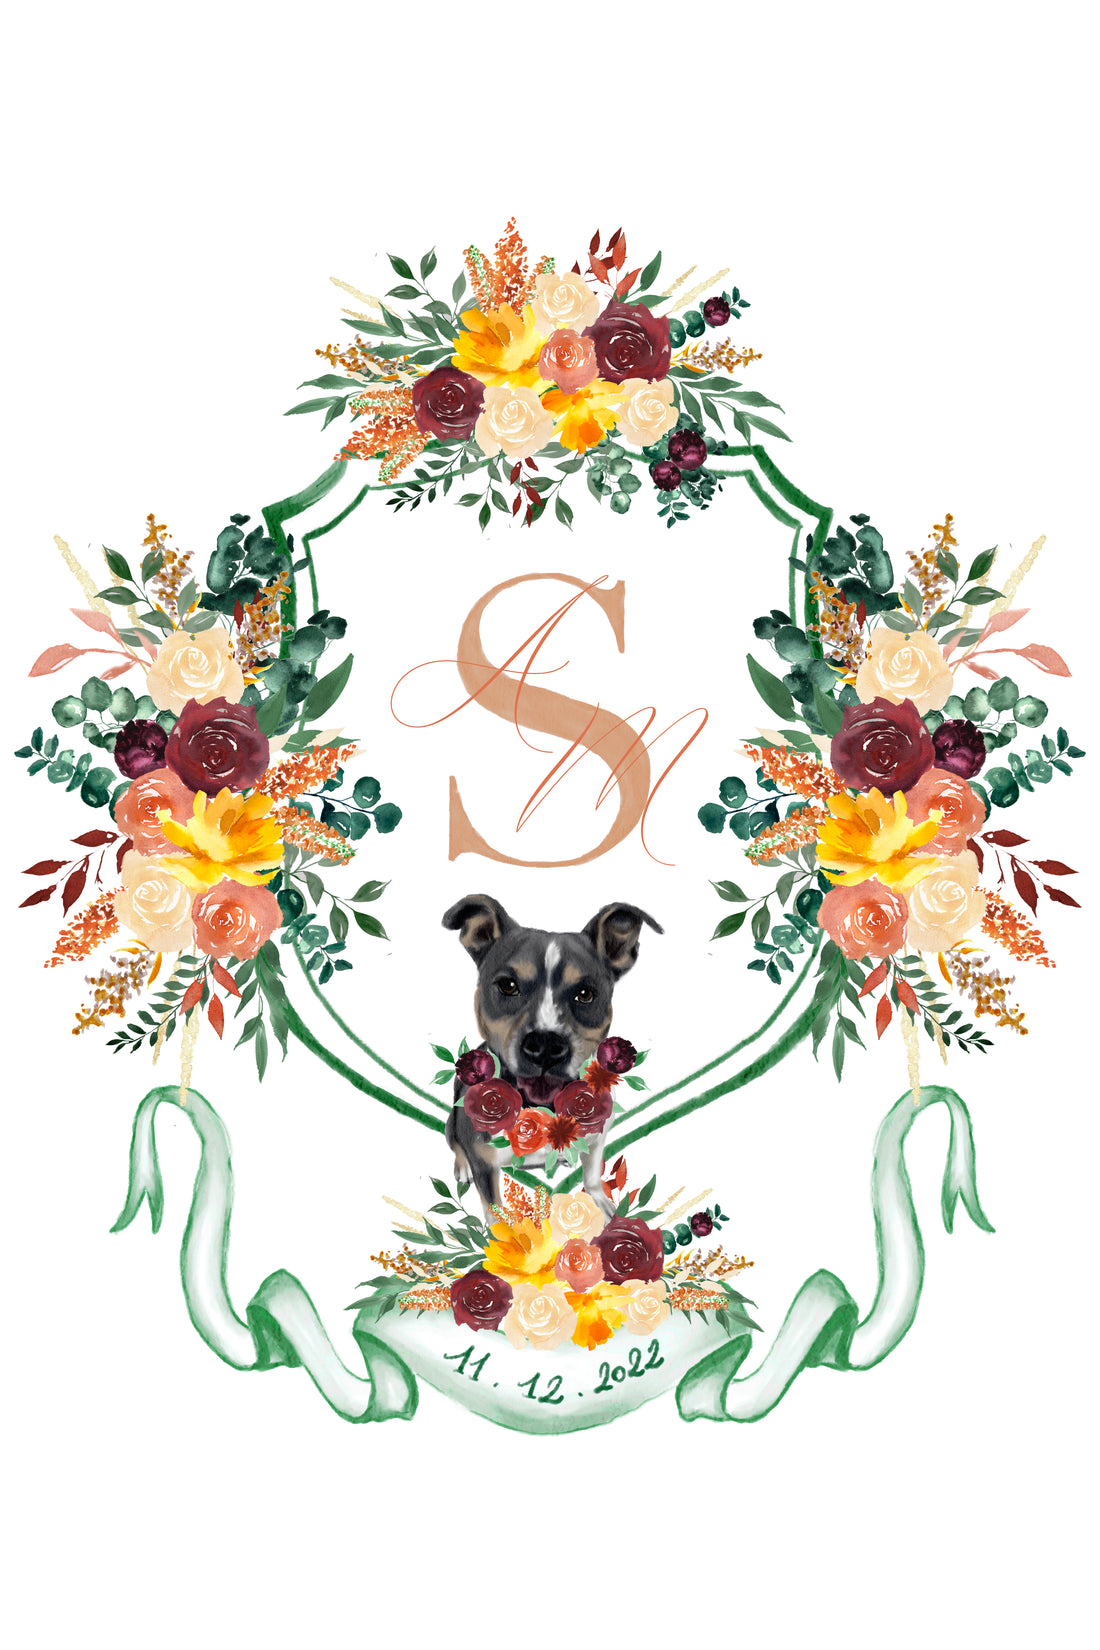 Custom wedding crest with dog portrait - November 12 2022